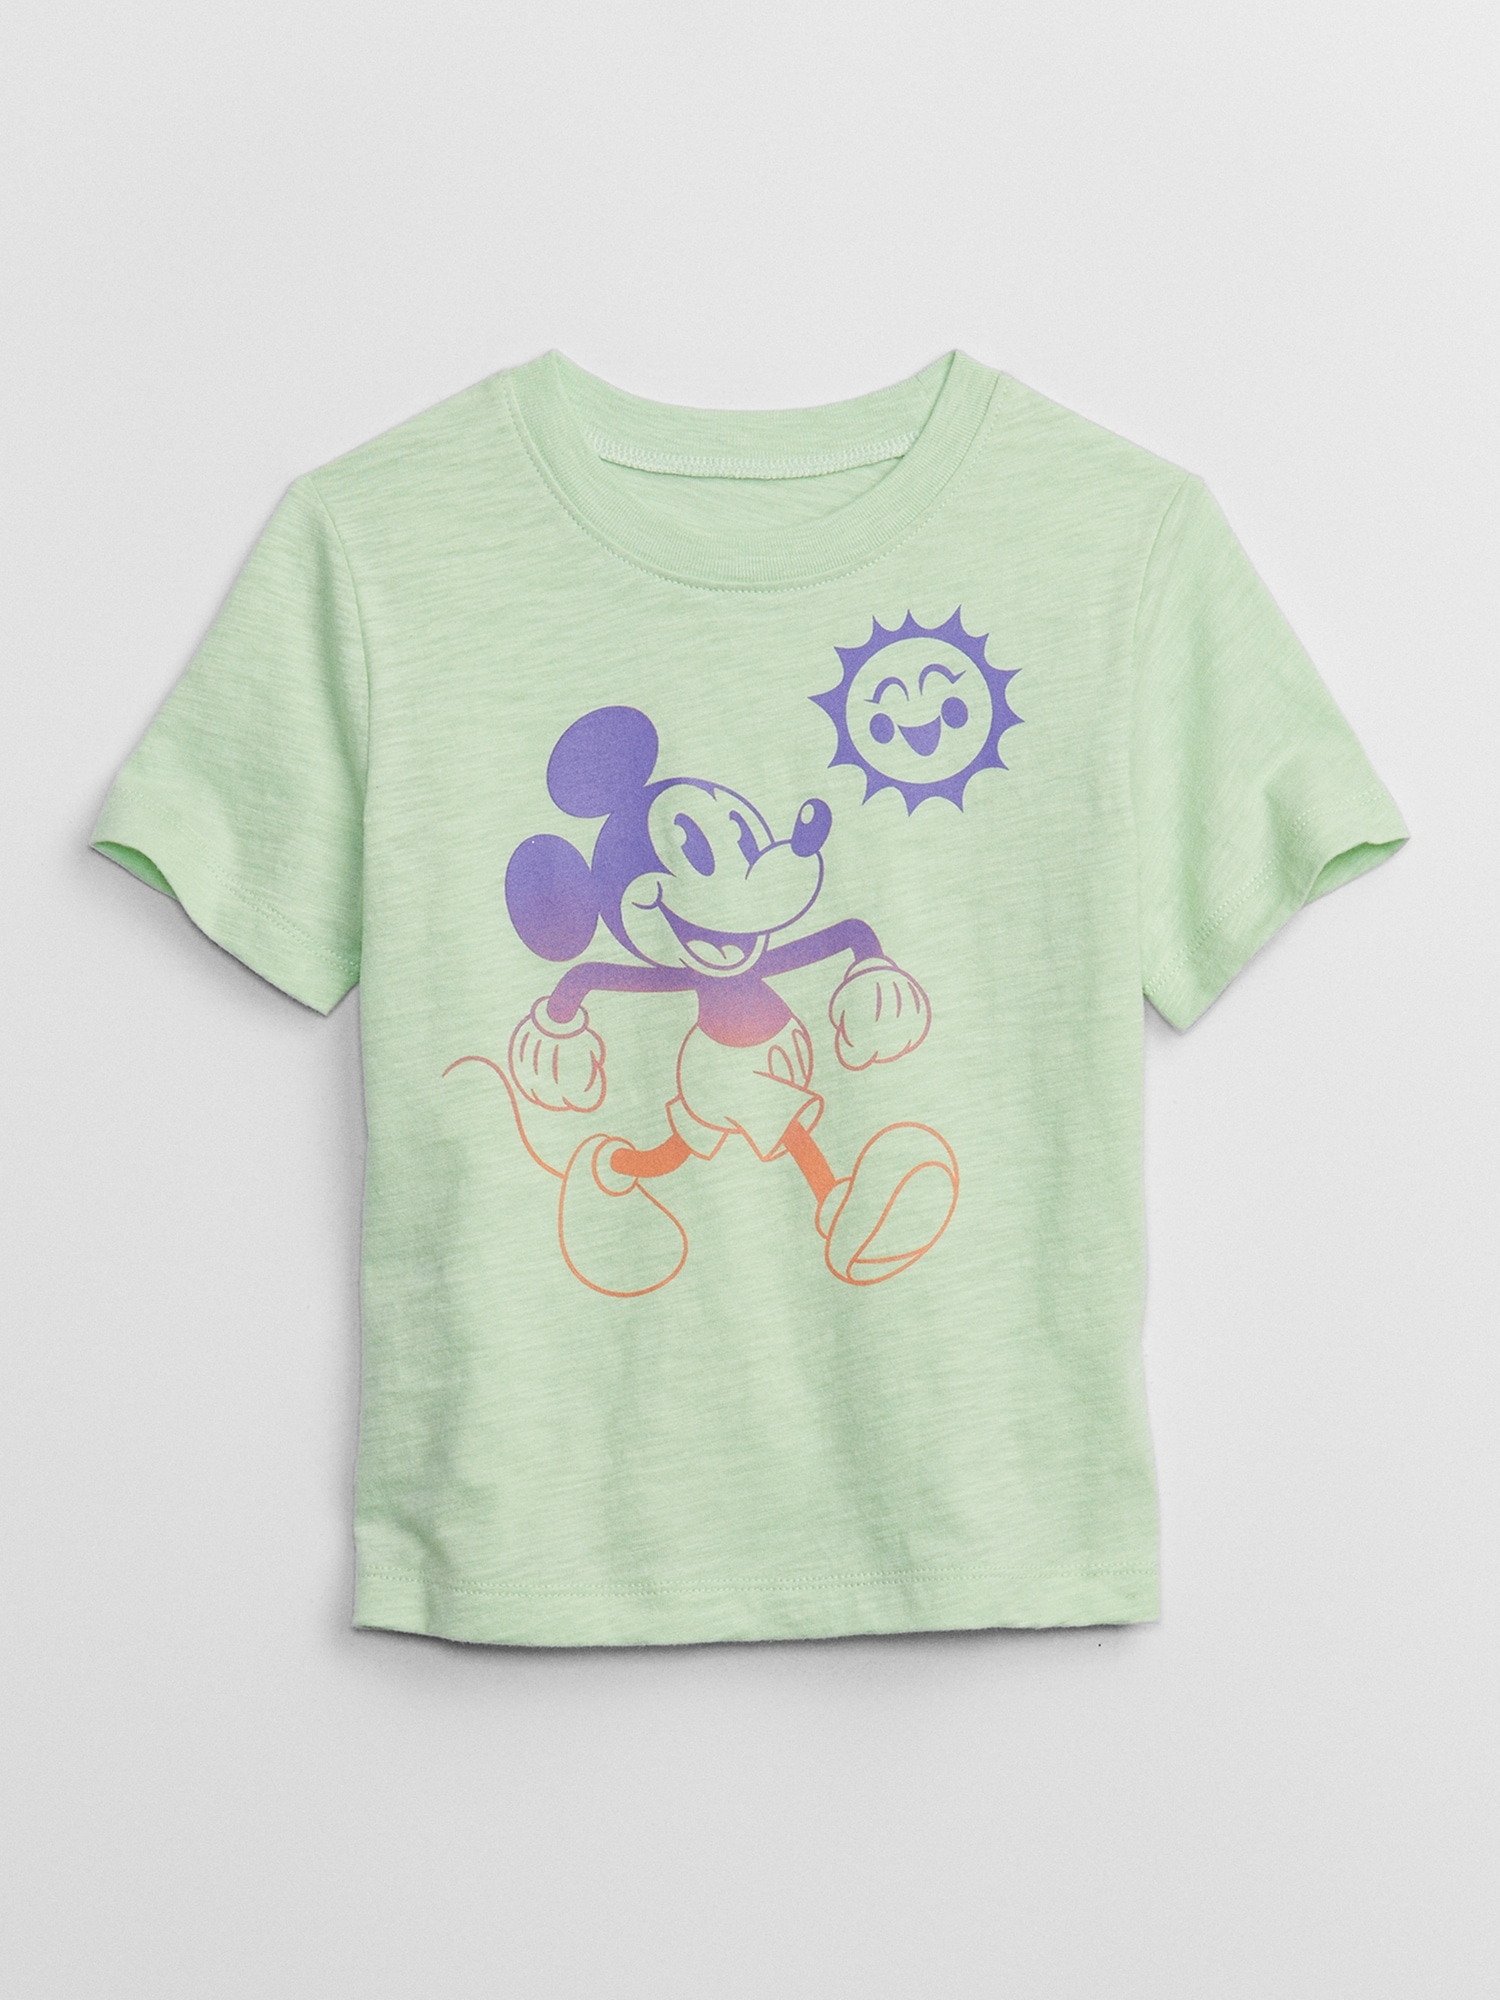 Mickey Mouse Shirts Factory | Gap